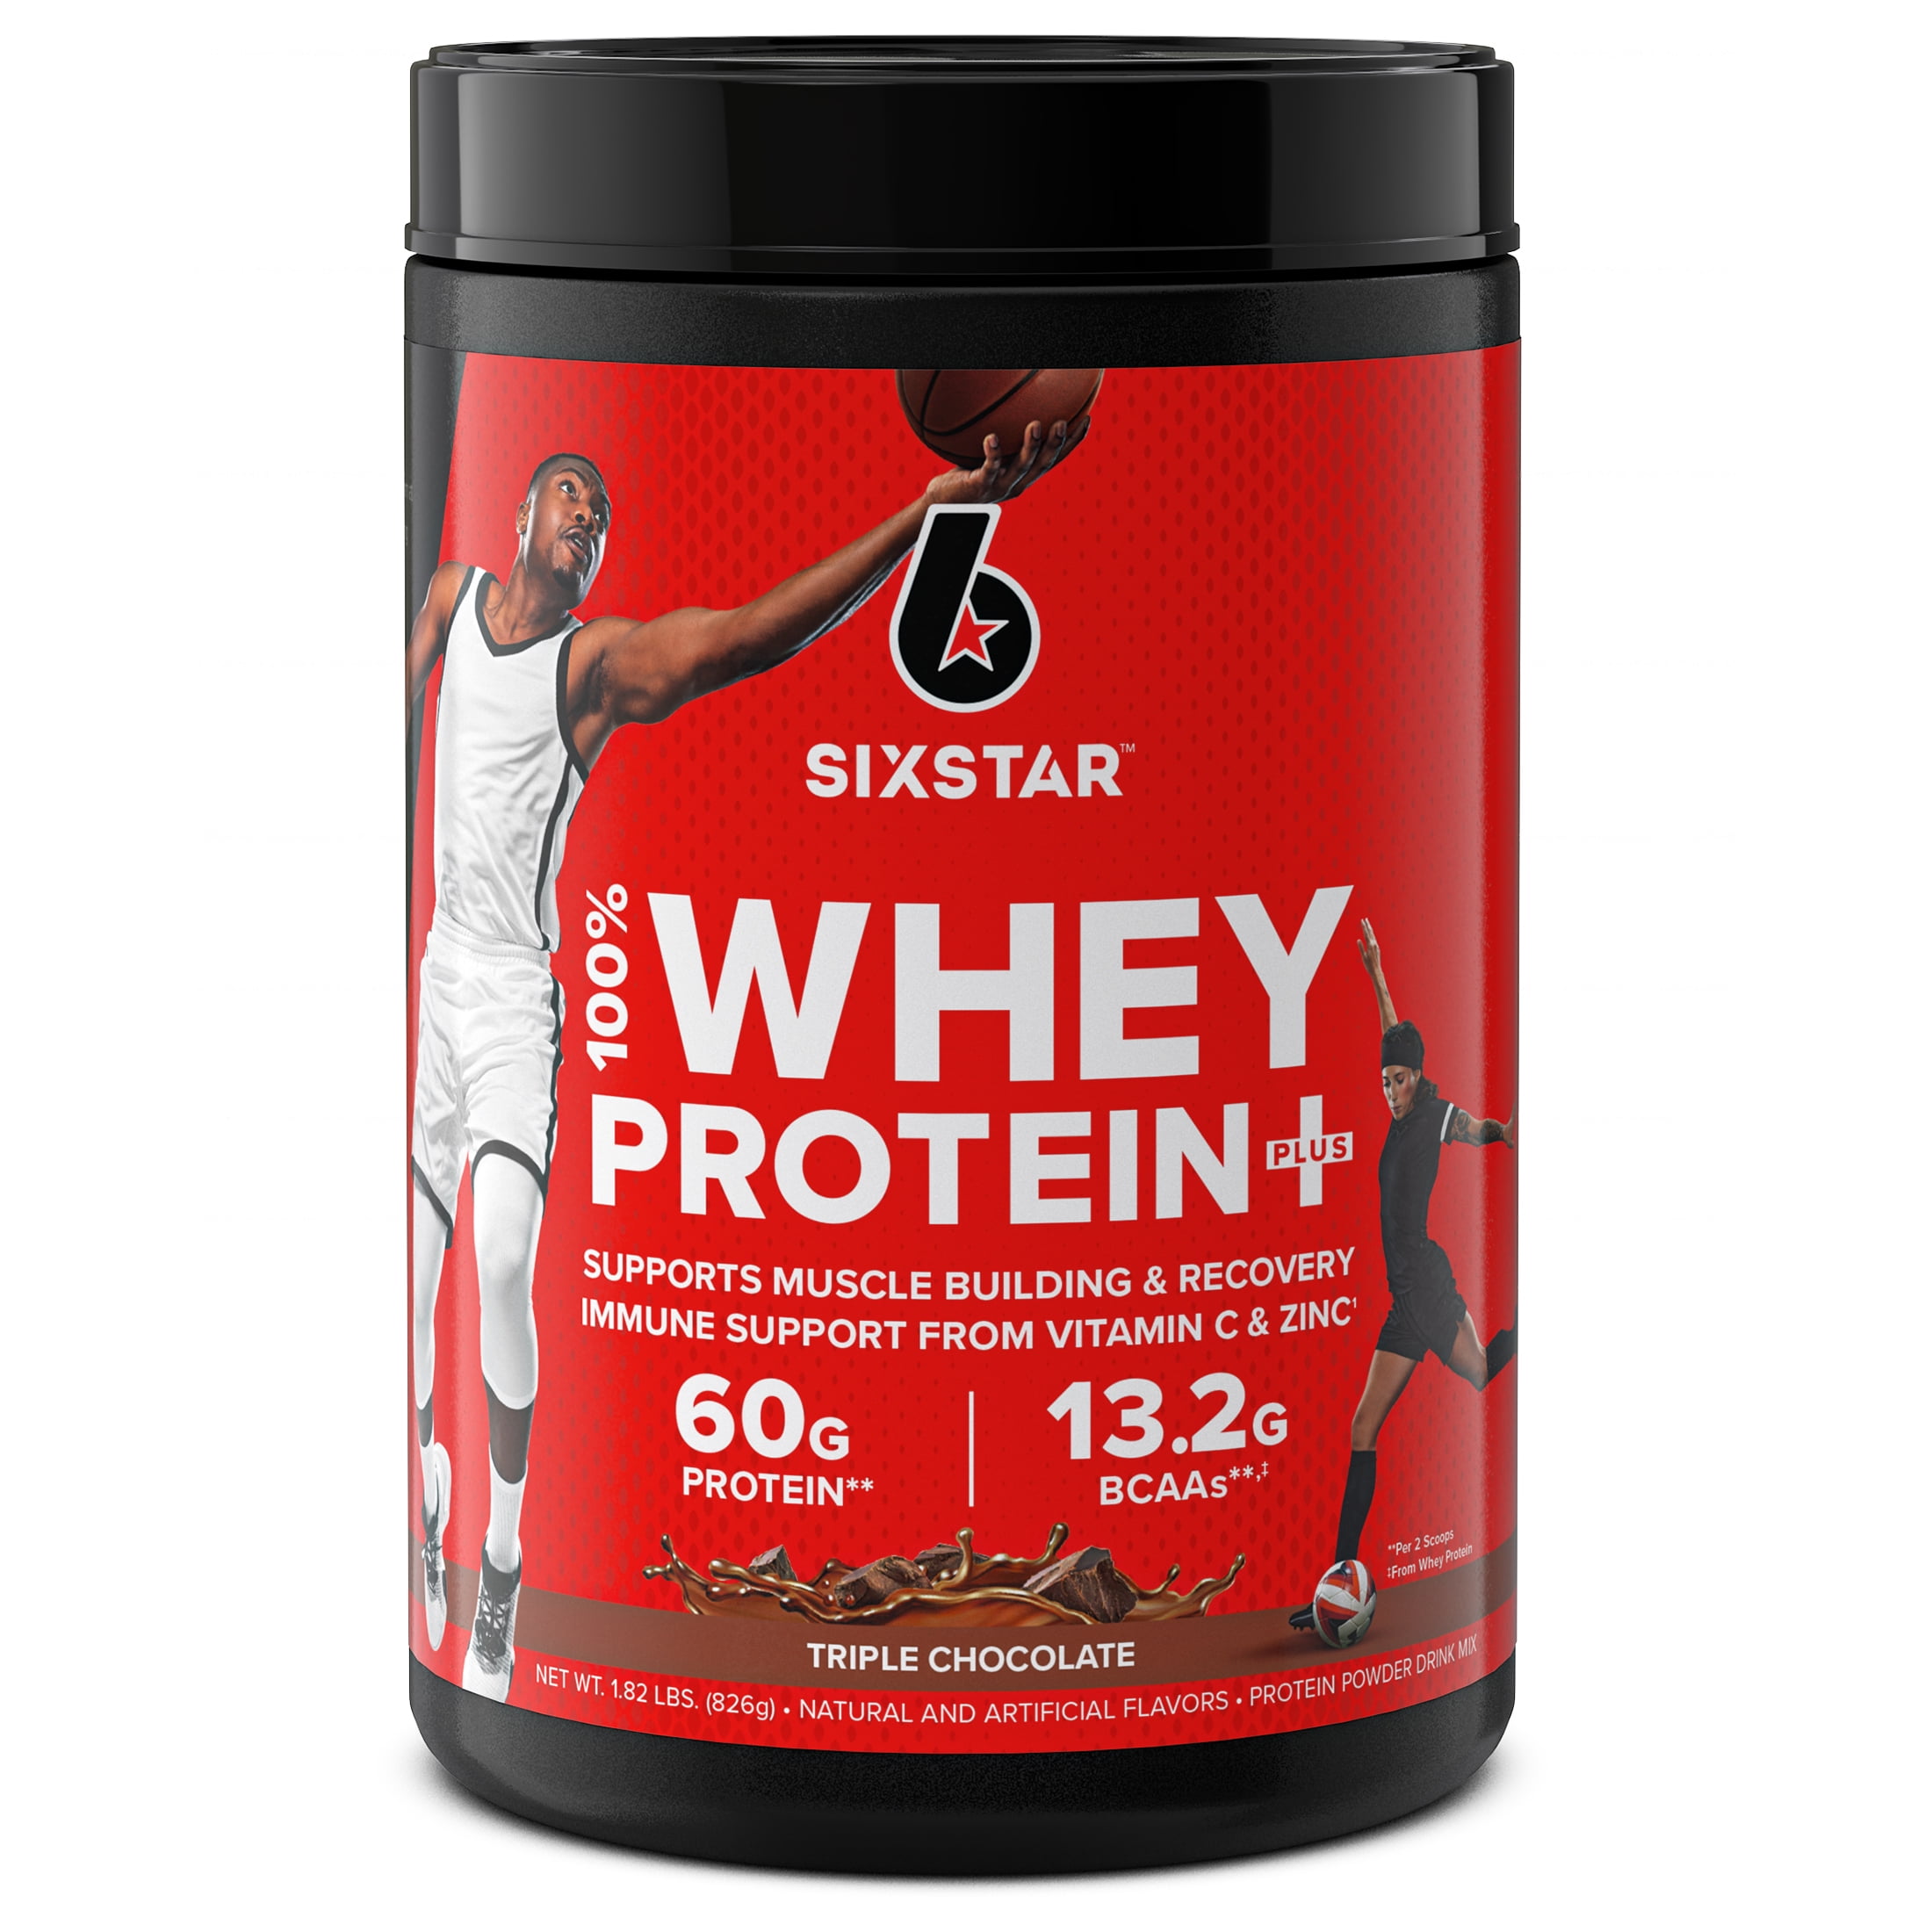 Black Magic Supply Multi Source Whey Protein (Milk Chocolate - 25 Servings)